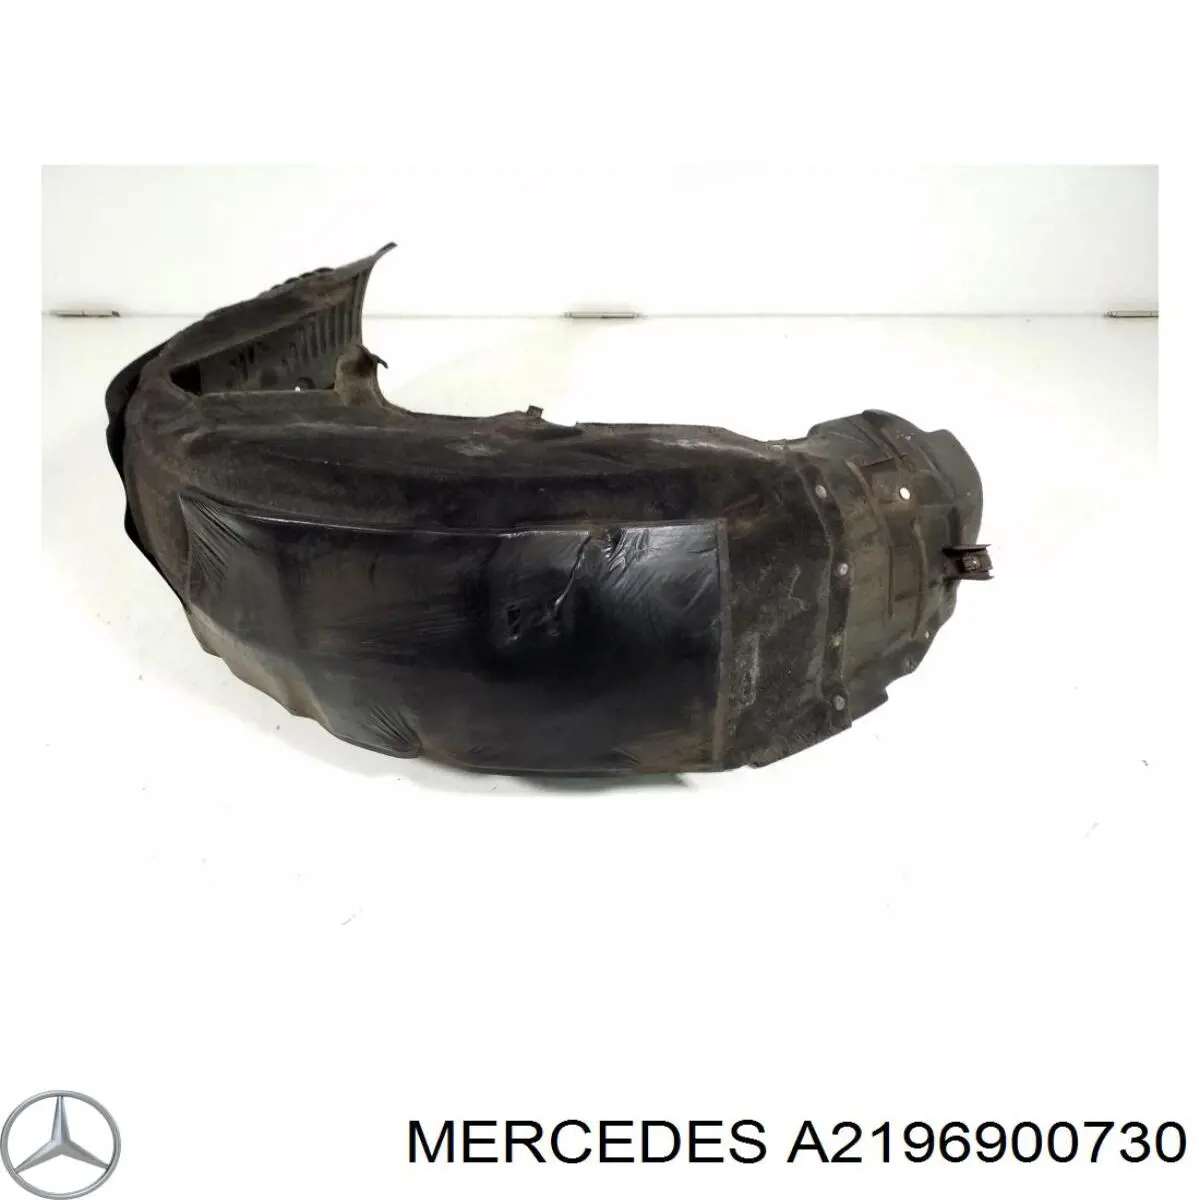 A2196900730 Mercedes guardabarros interior, aleta trasera, izquierdo